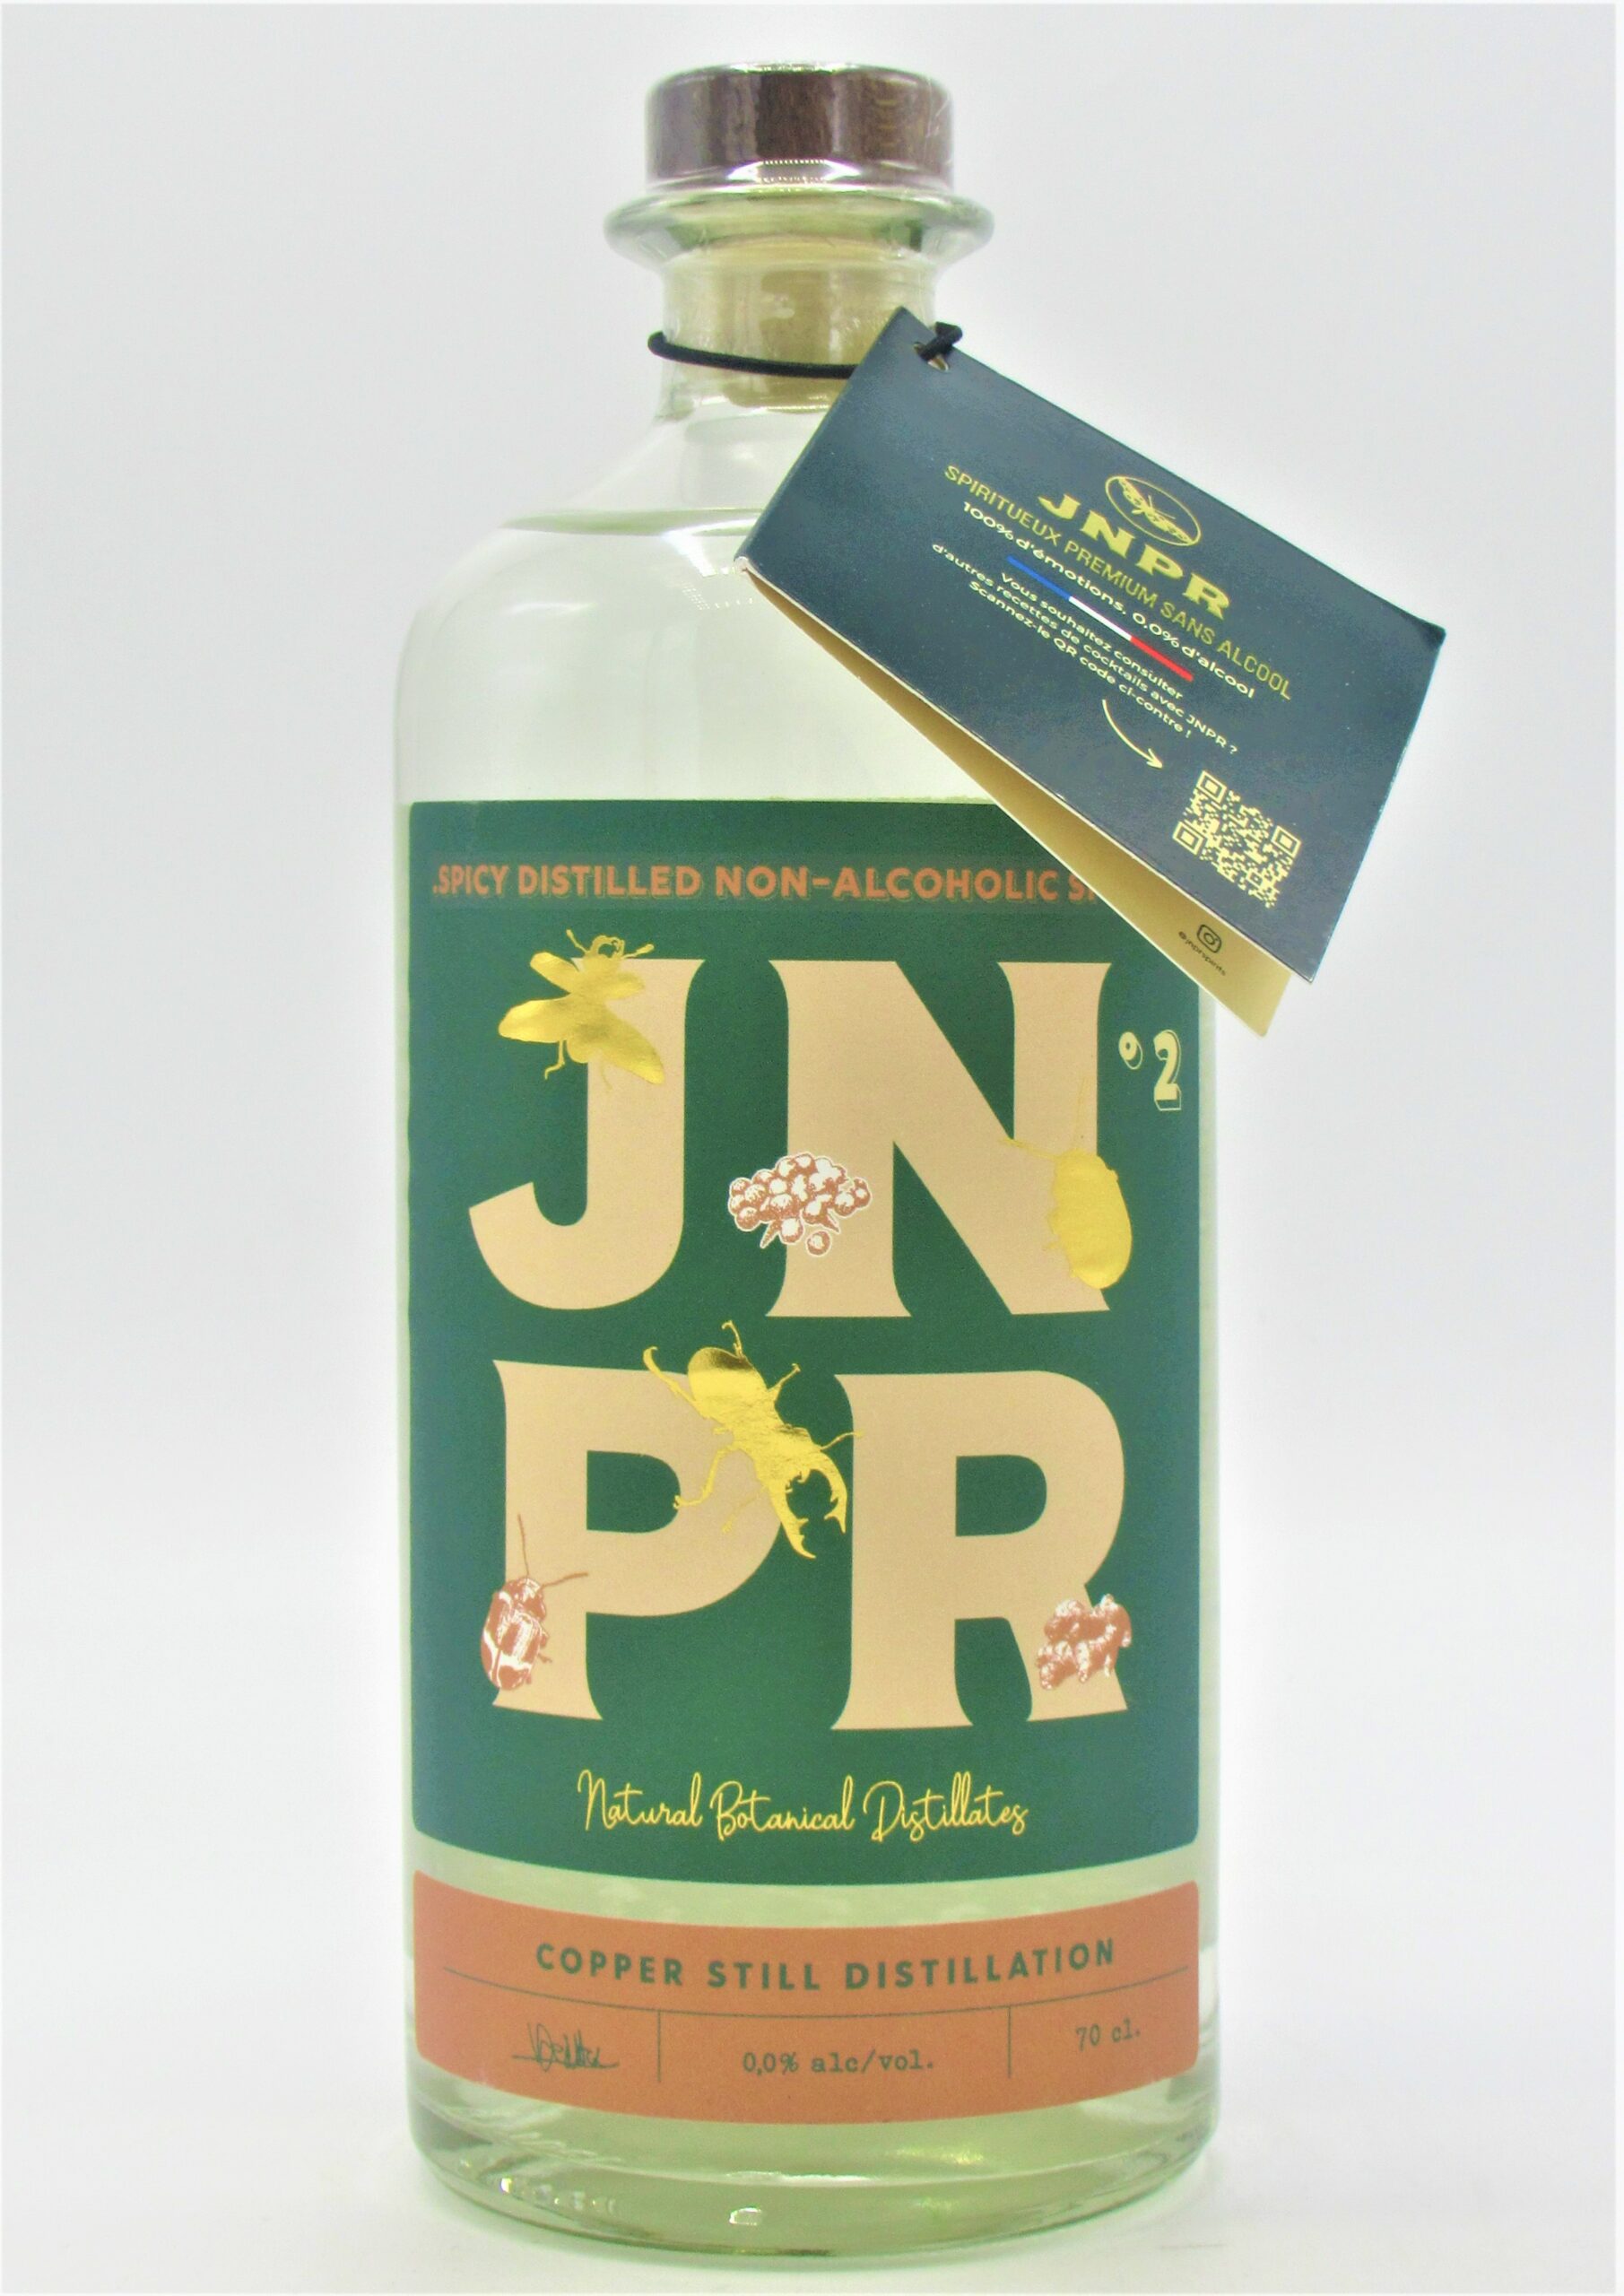 Gin JNPR N°3 - Sans Alcool au meilleur prix